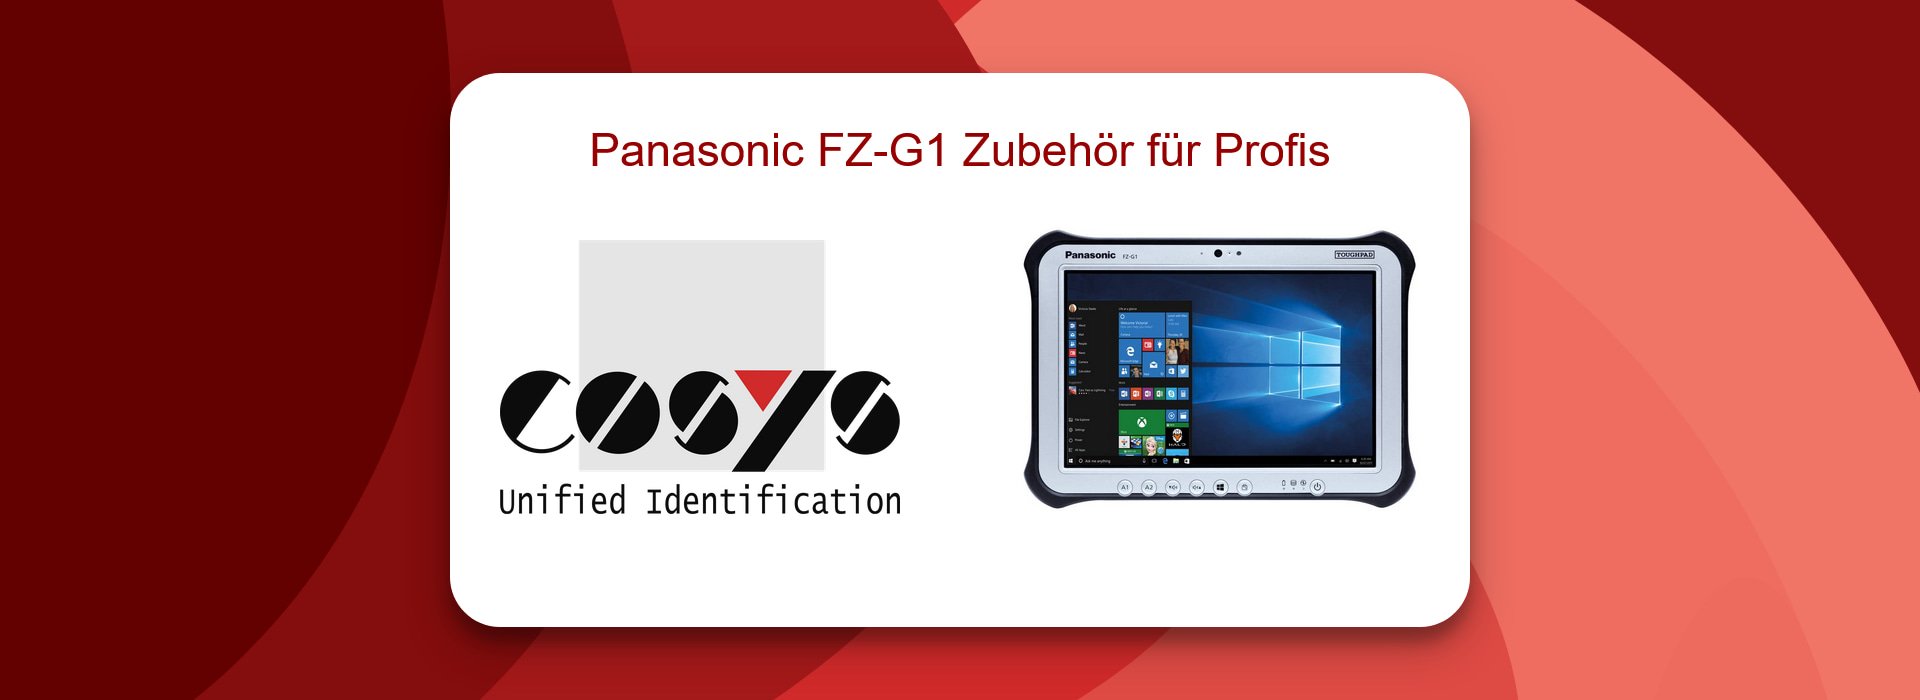 Panasonic FZ-G1 Zubehör für Profis